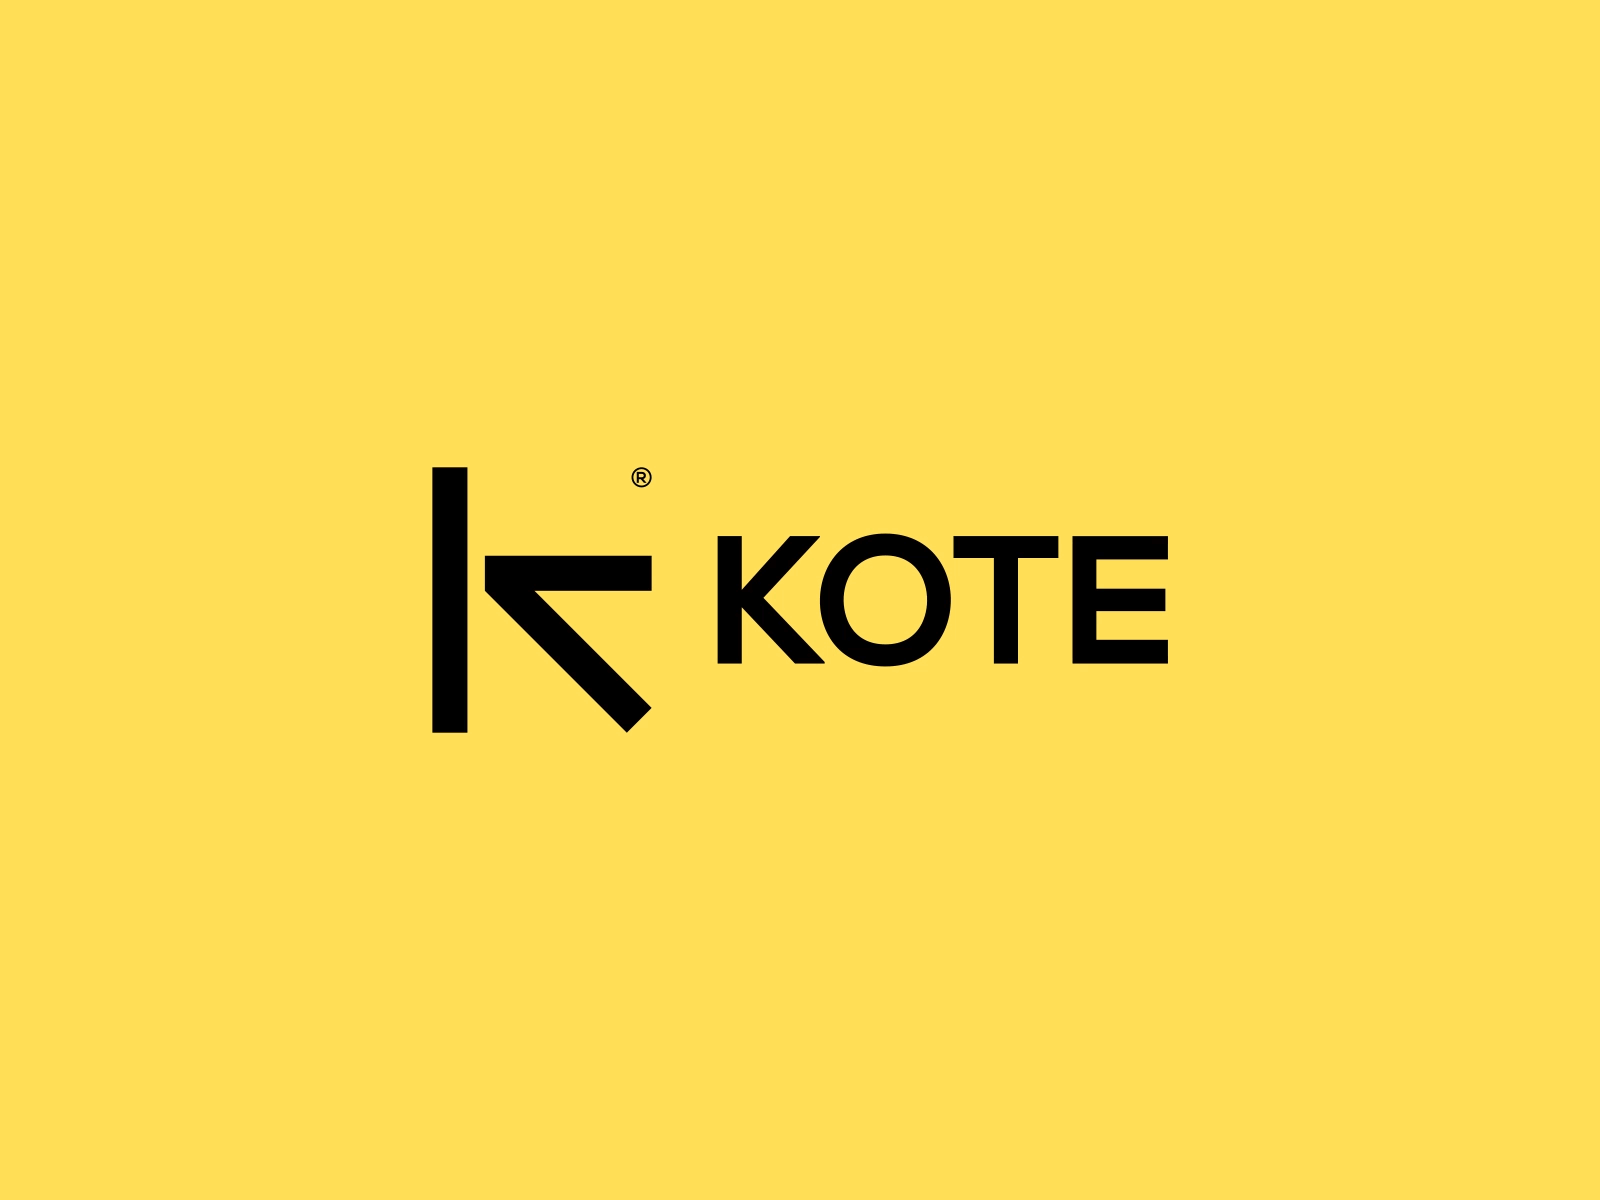 Kote | Logo animation animation animation 2d brand identity branding clothing logo clothing man branding fashion identity fashion logo identity branding k letter logo animation man clothing